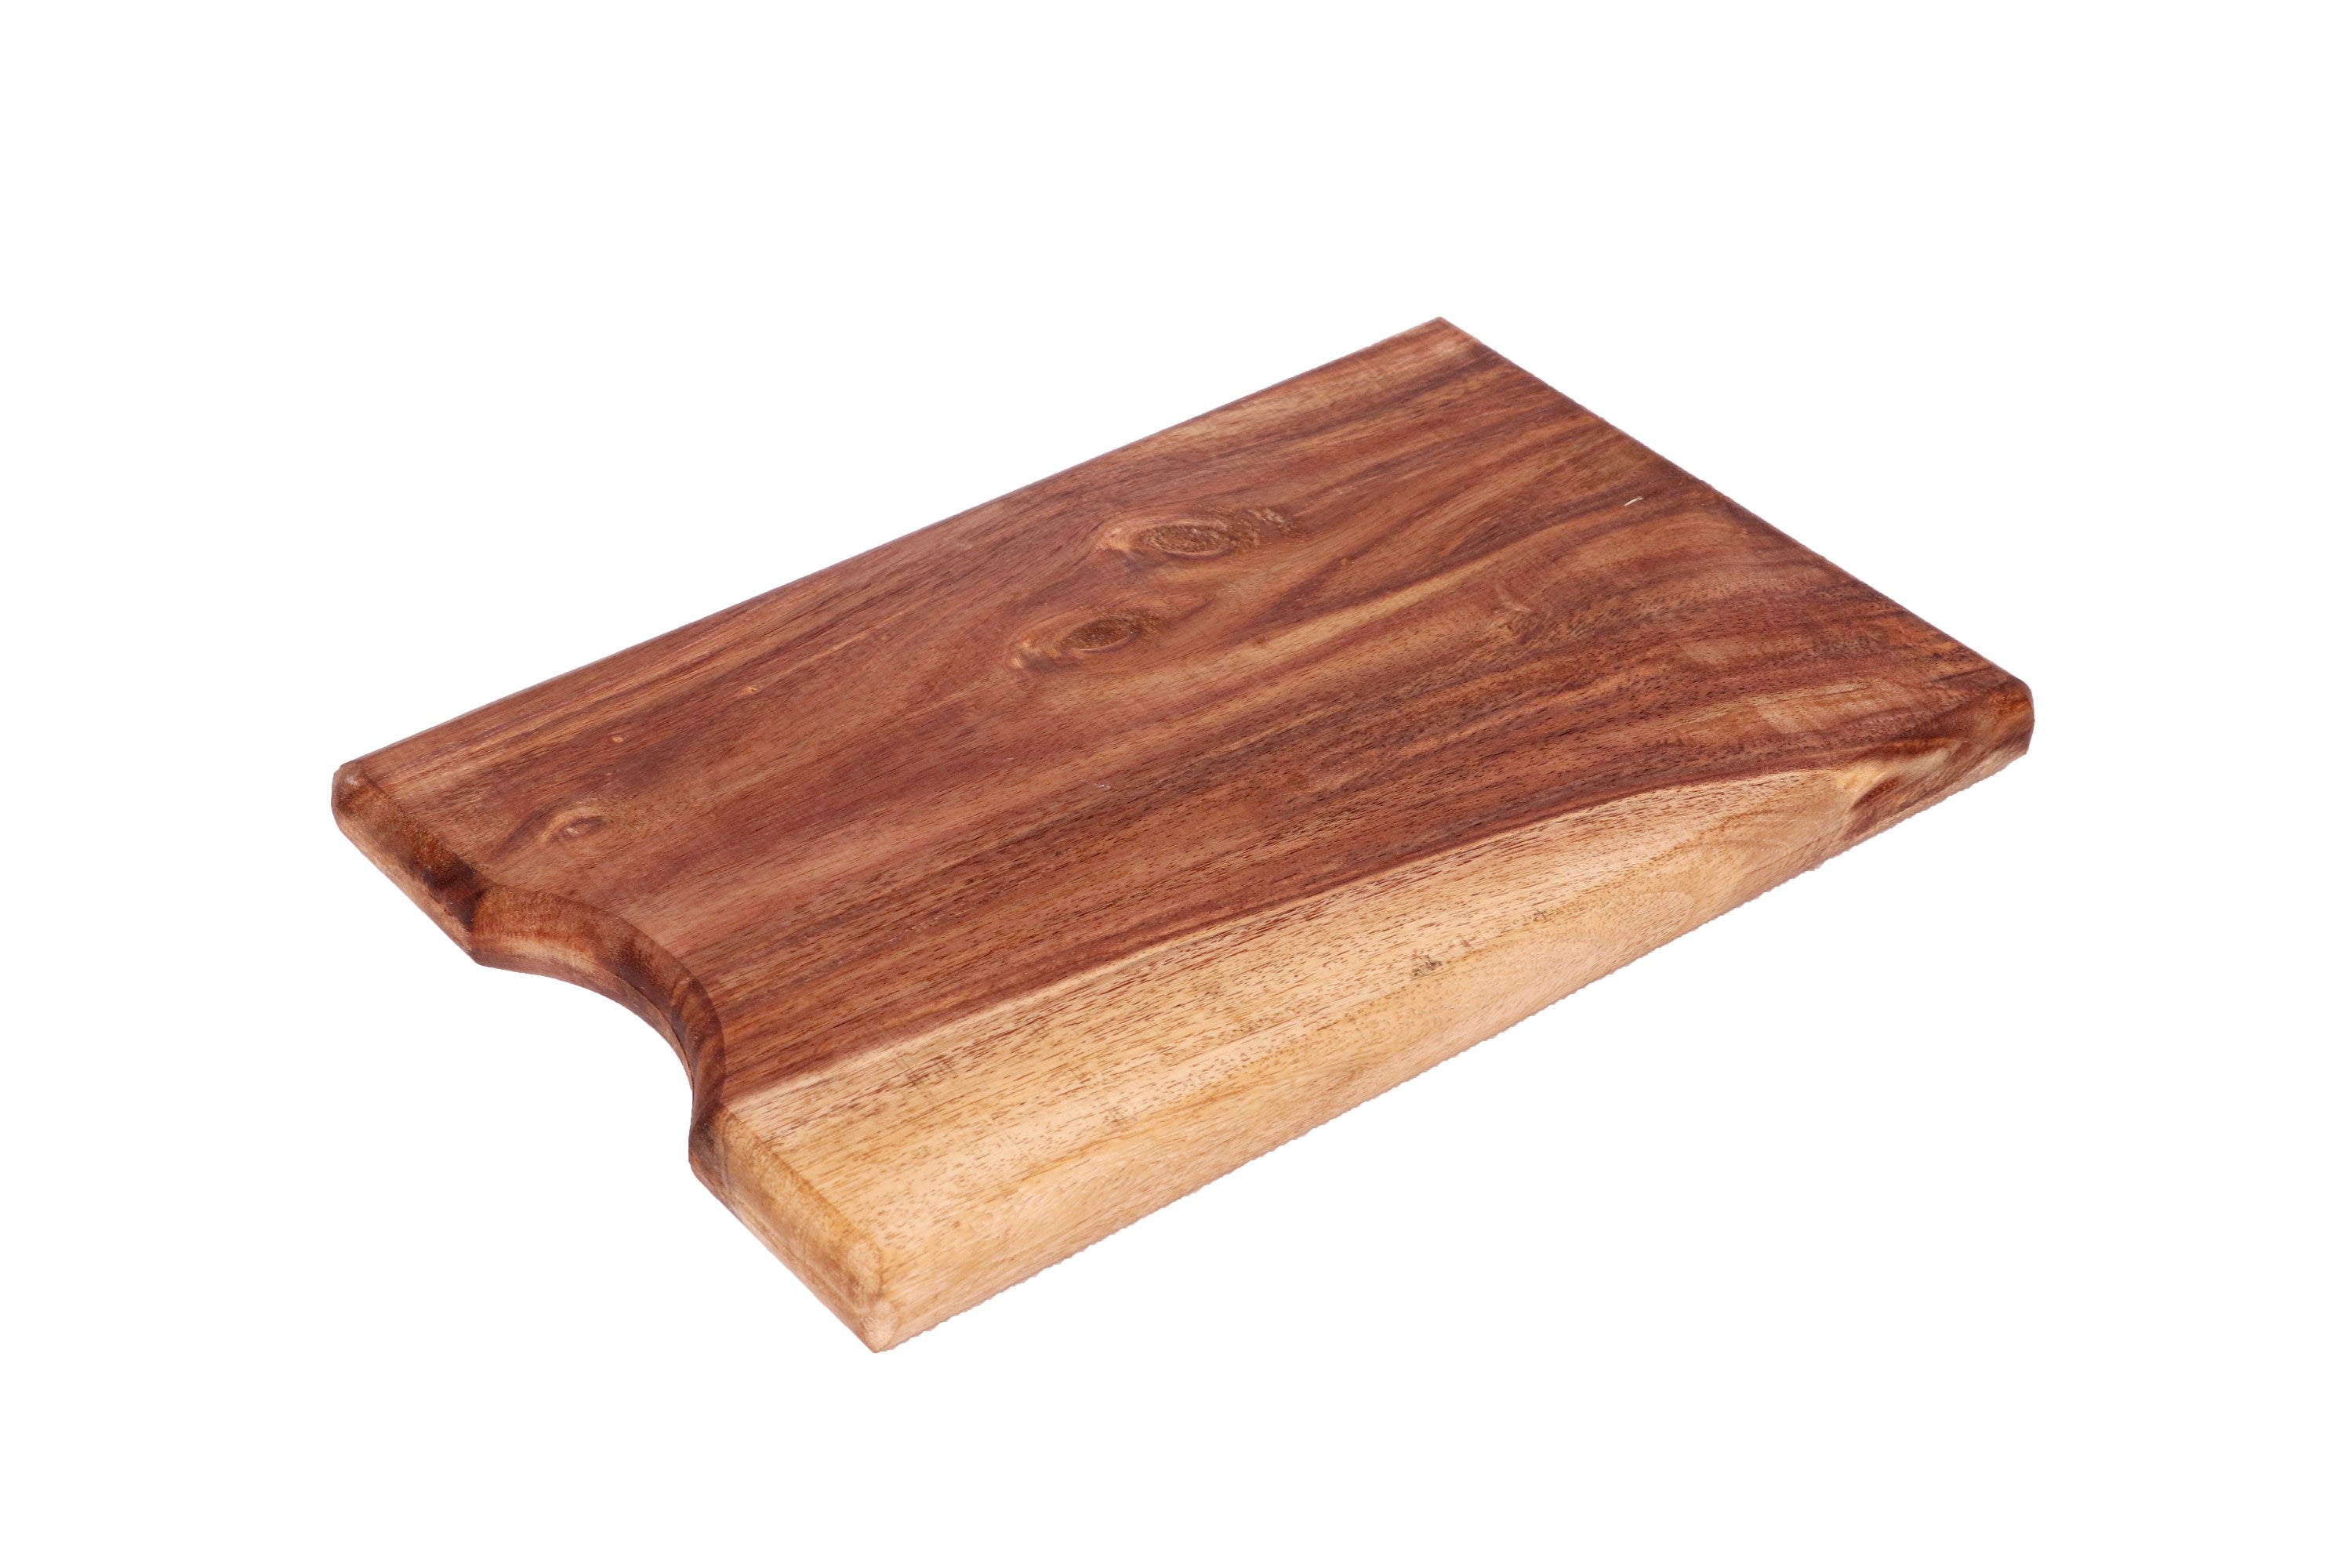 (Single wood) Curved Top Chopping Board Cutting Board